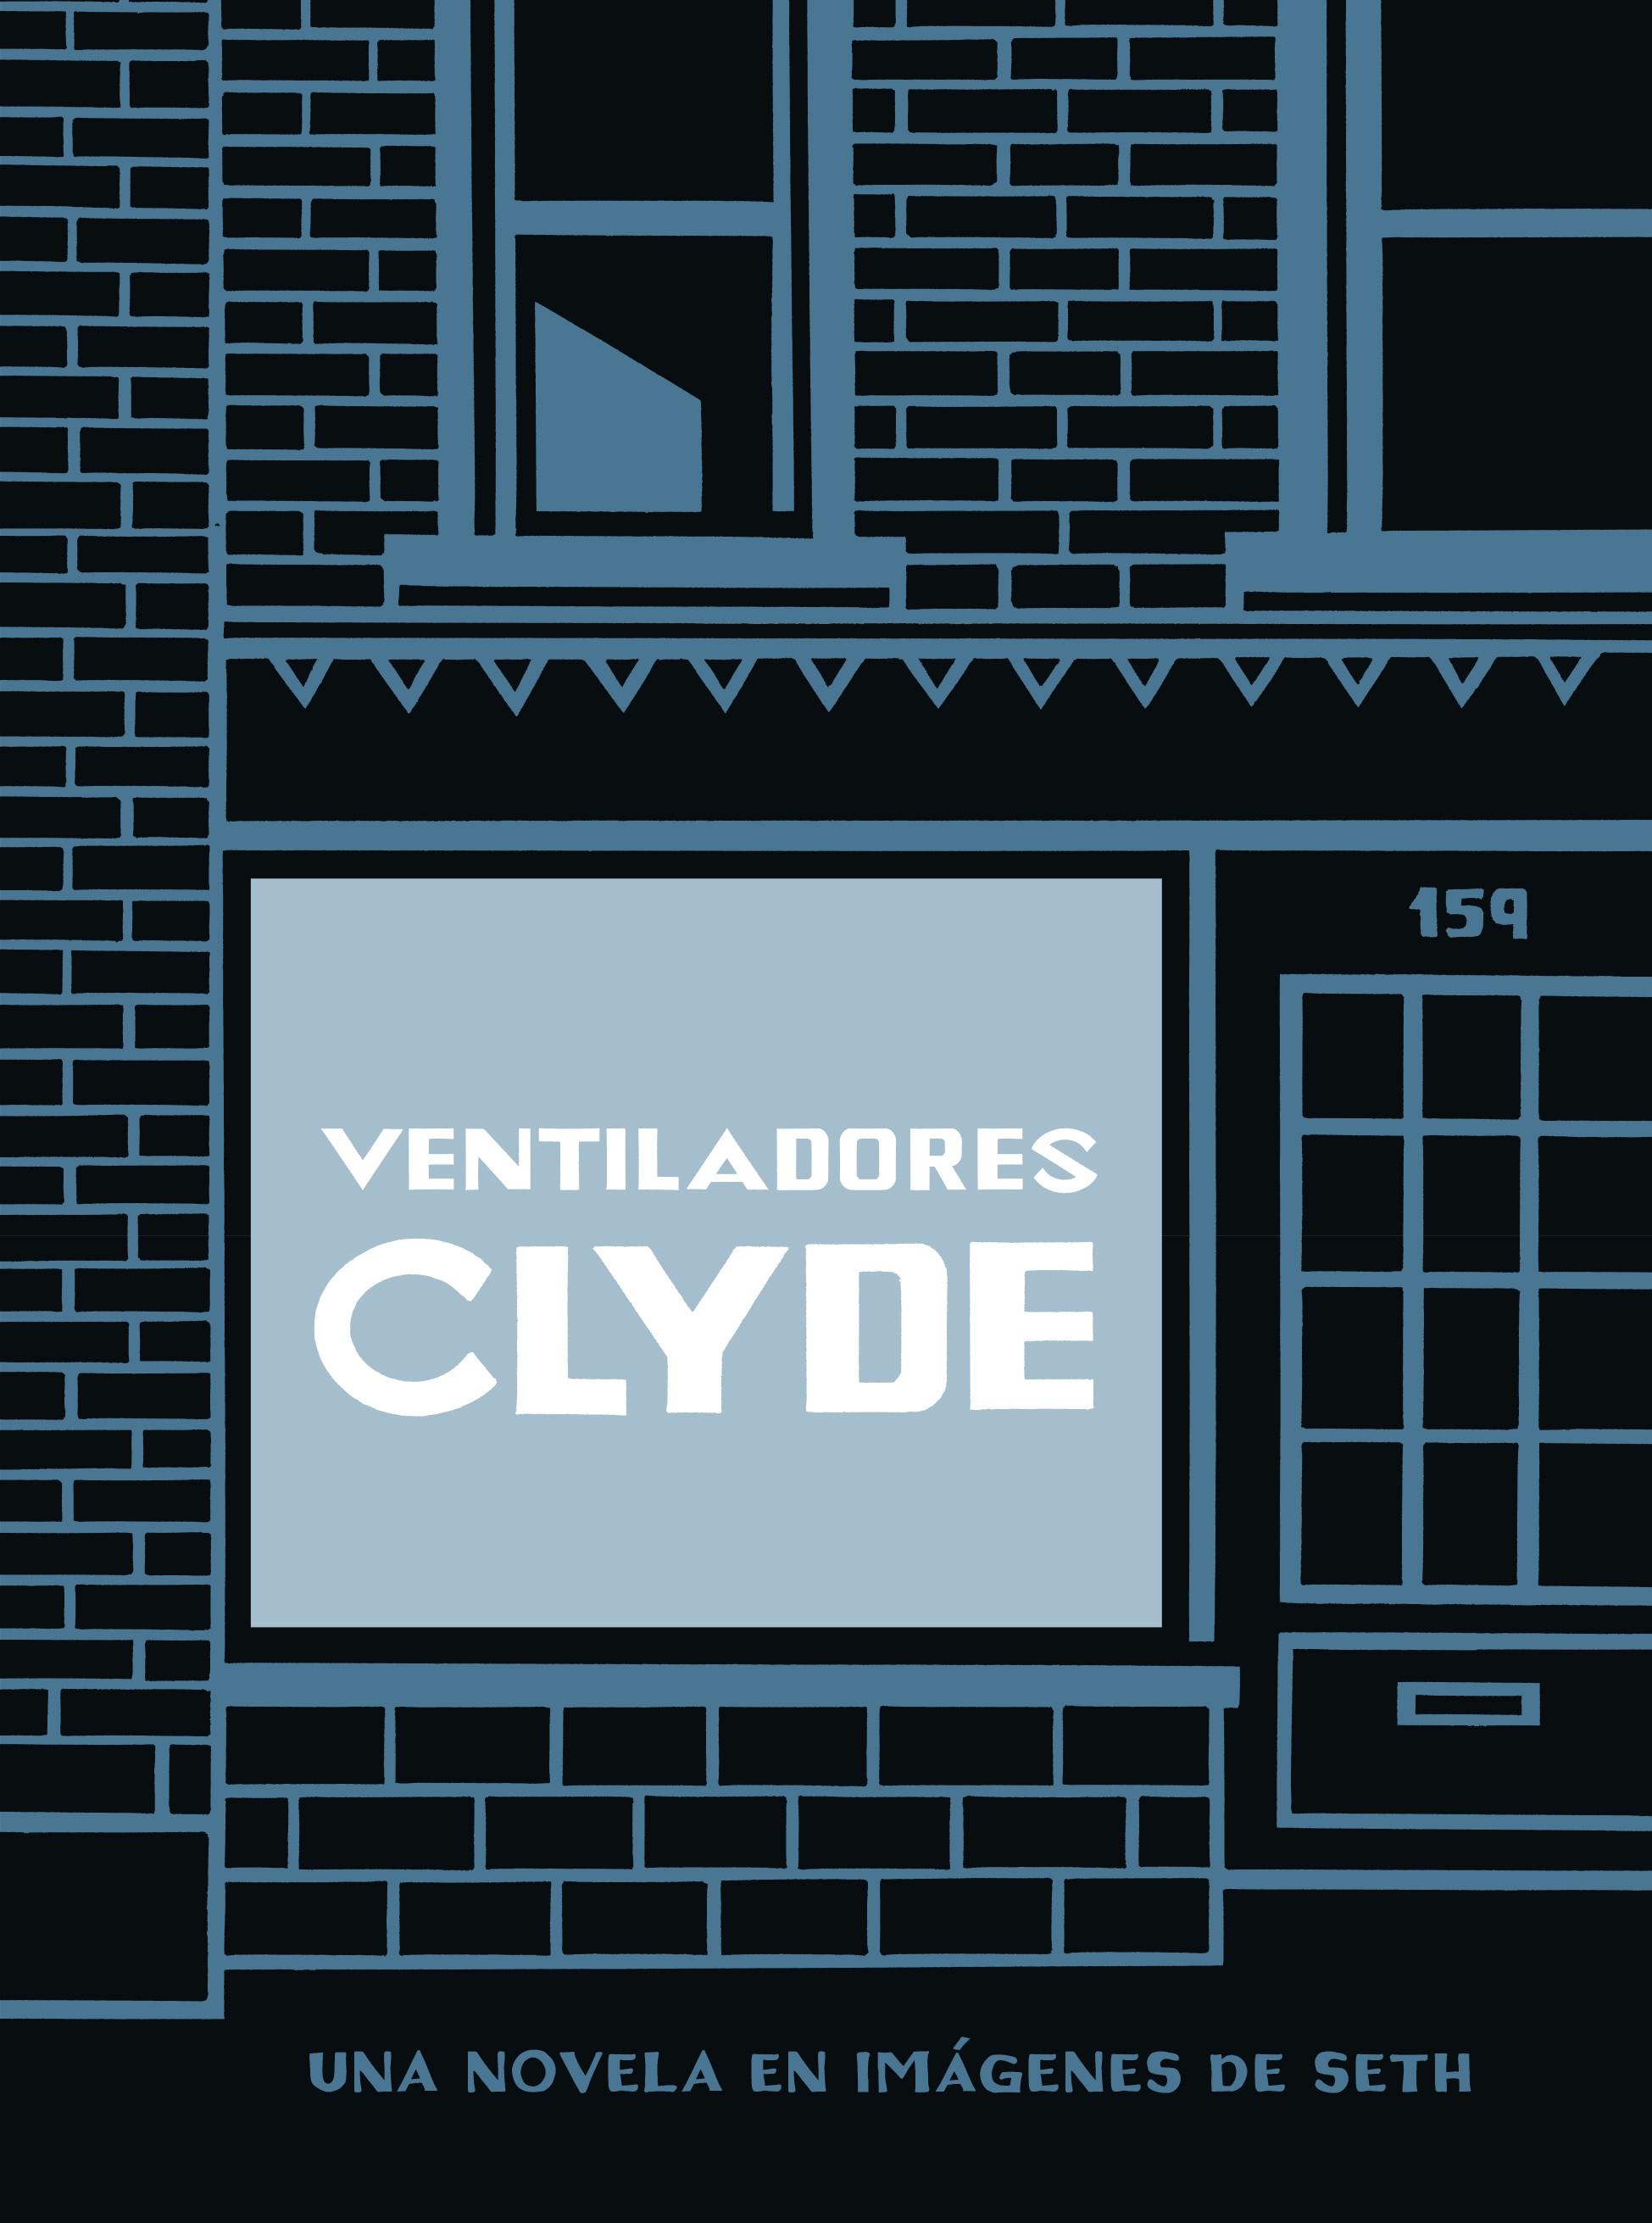 Ventiladores Clyde "Una novela en imágenes". 